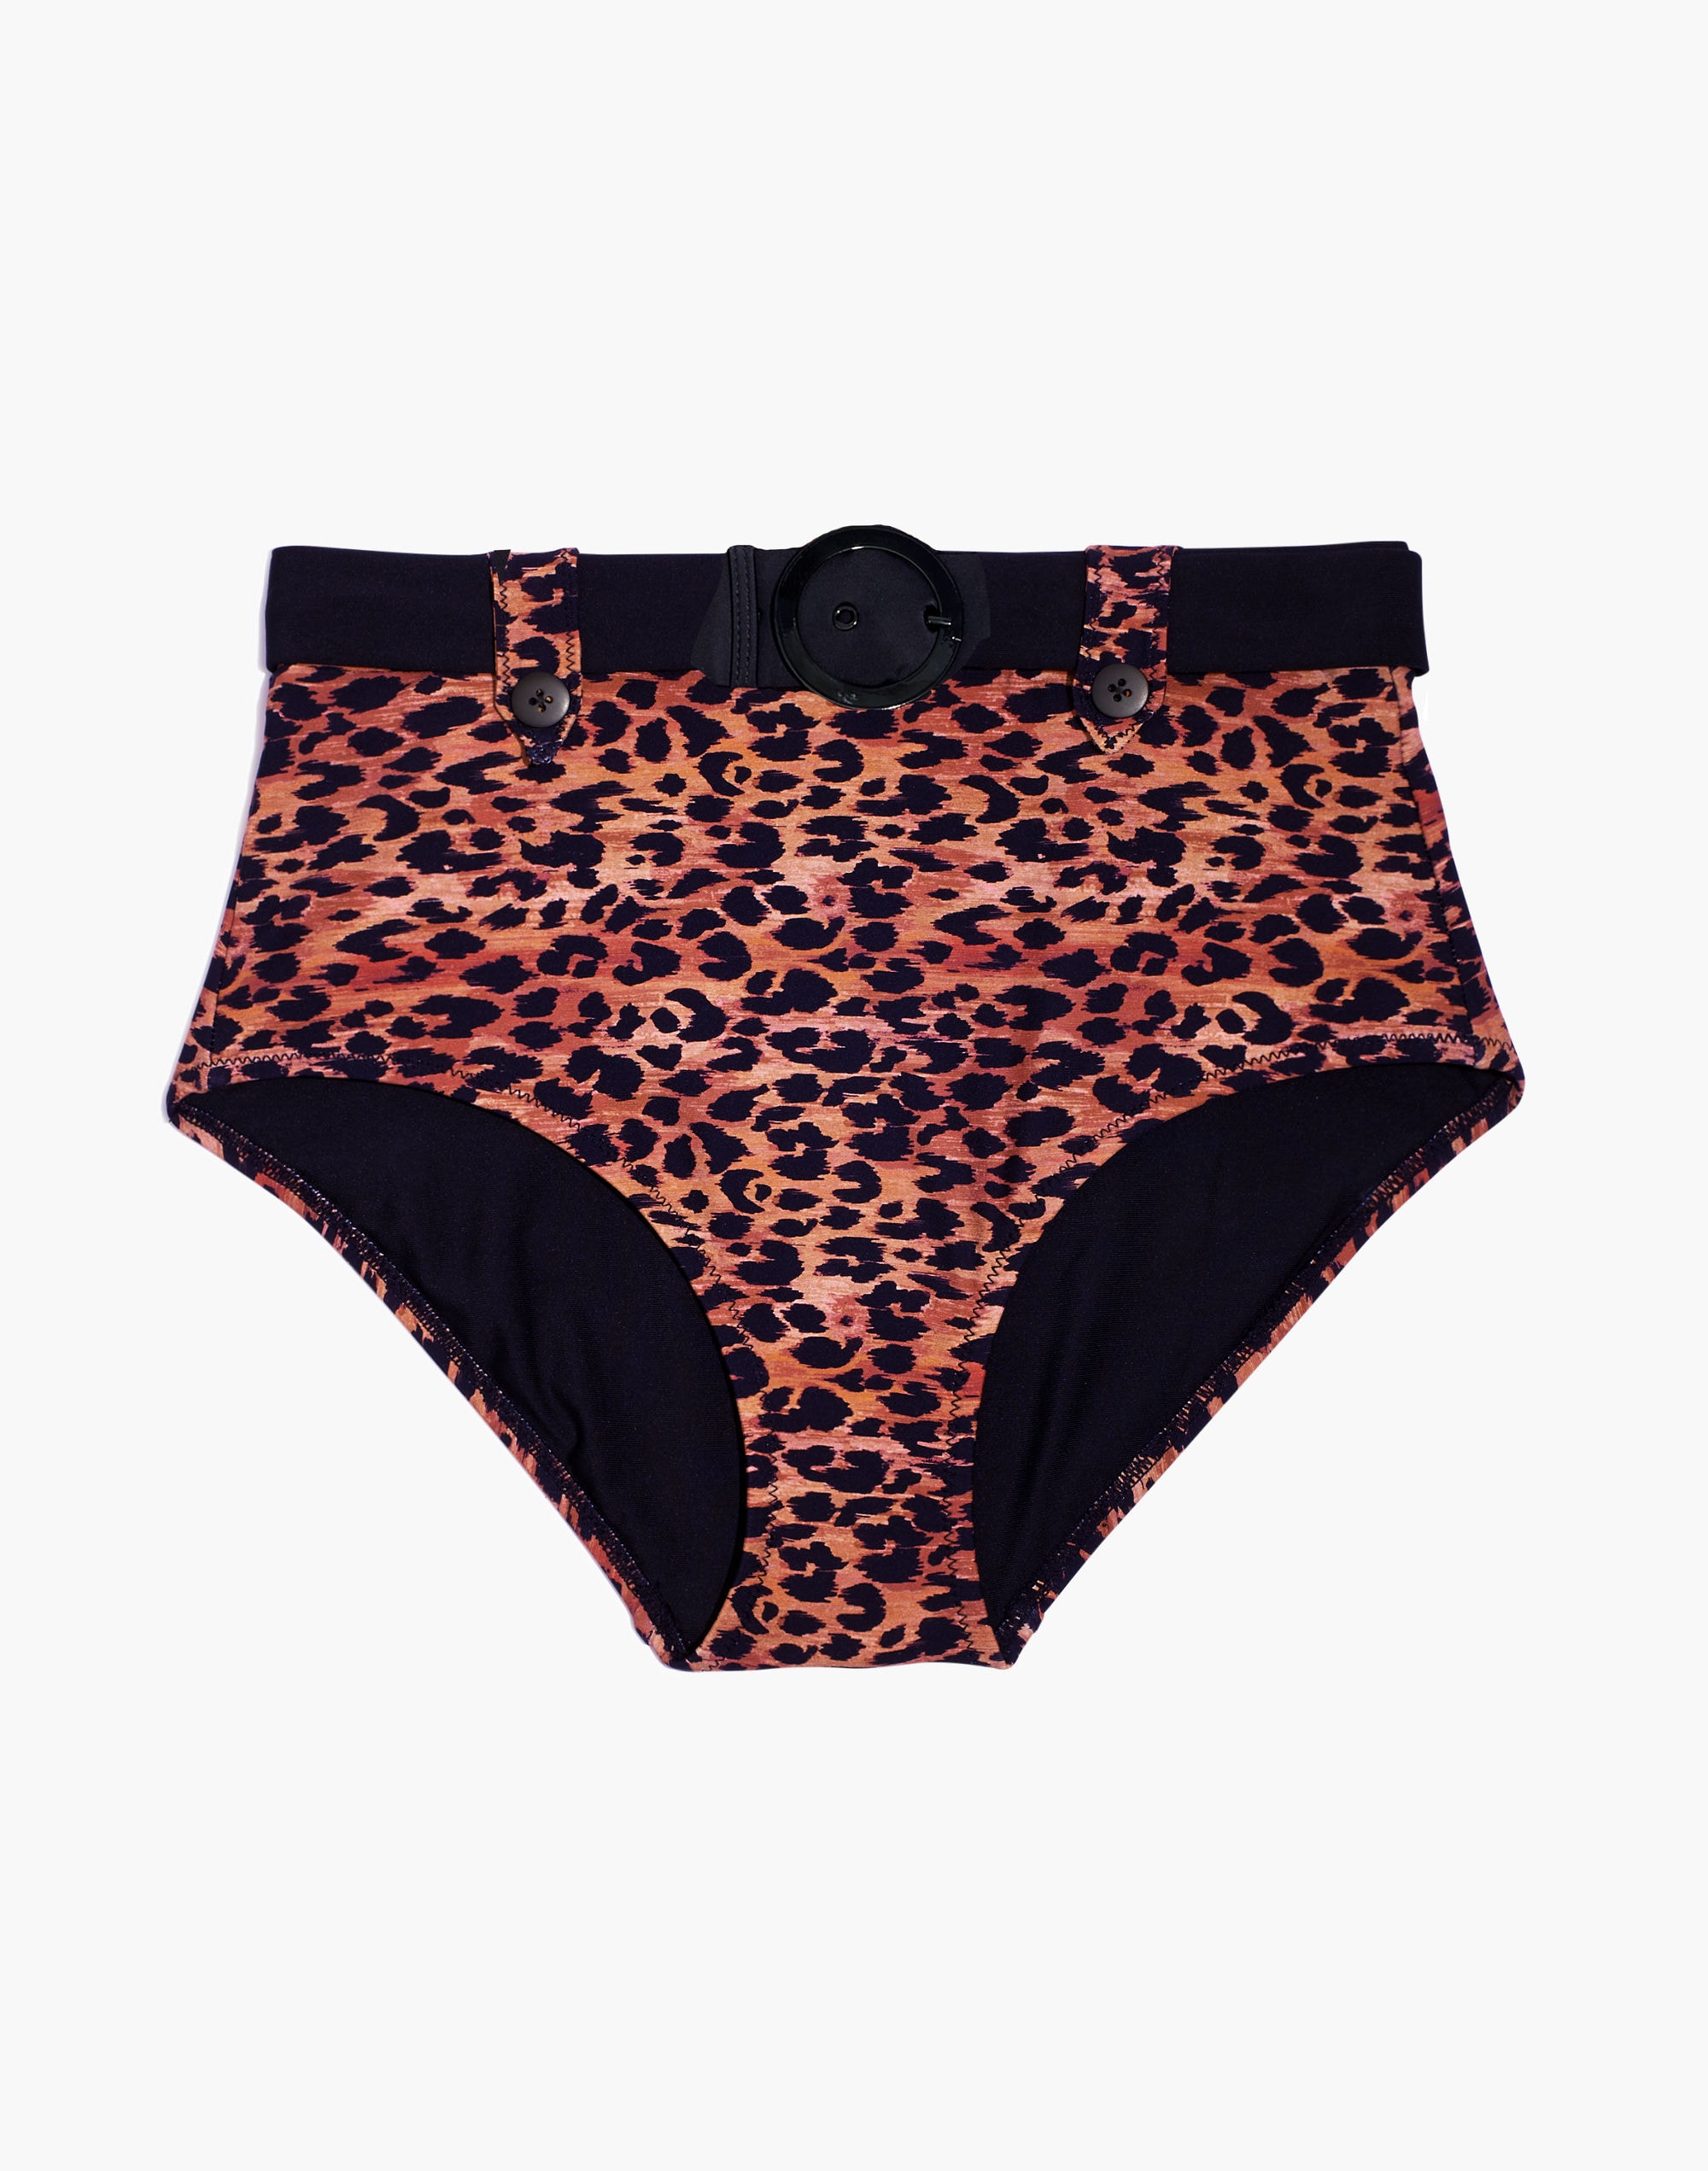 Solid & Striped® Annie High-Waist Bikini Bottom in Leopard Print